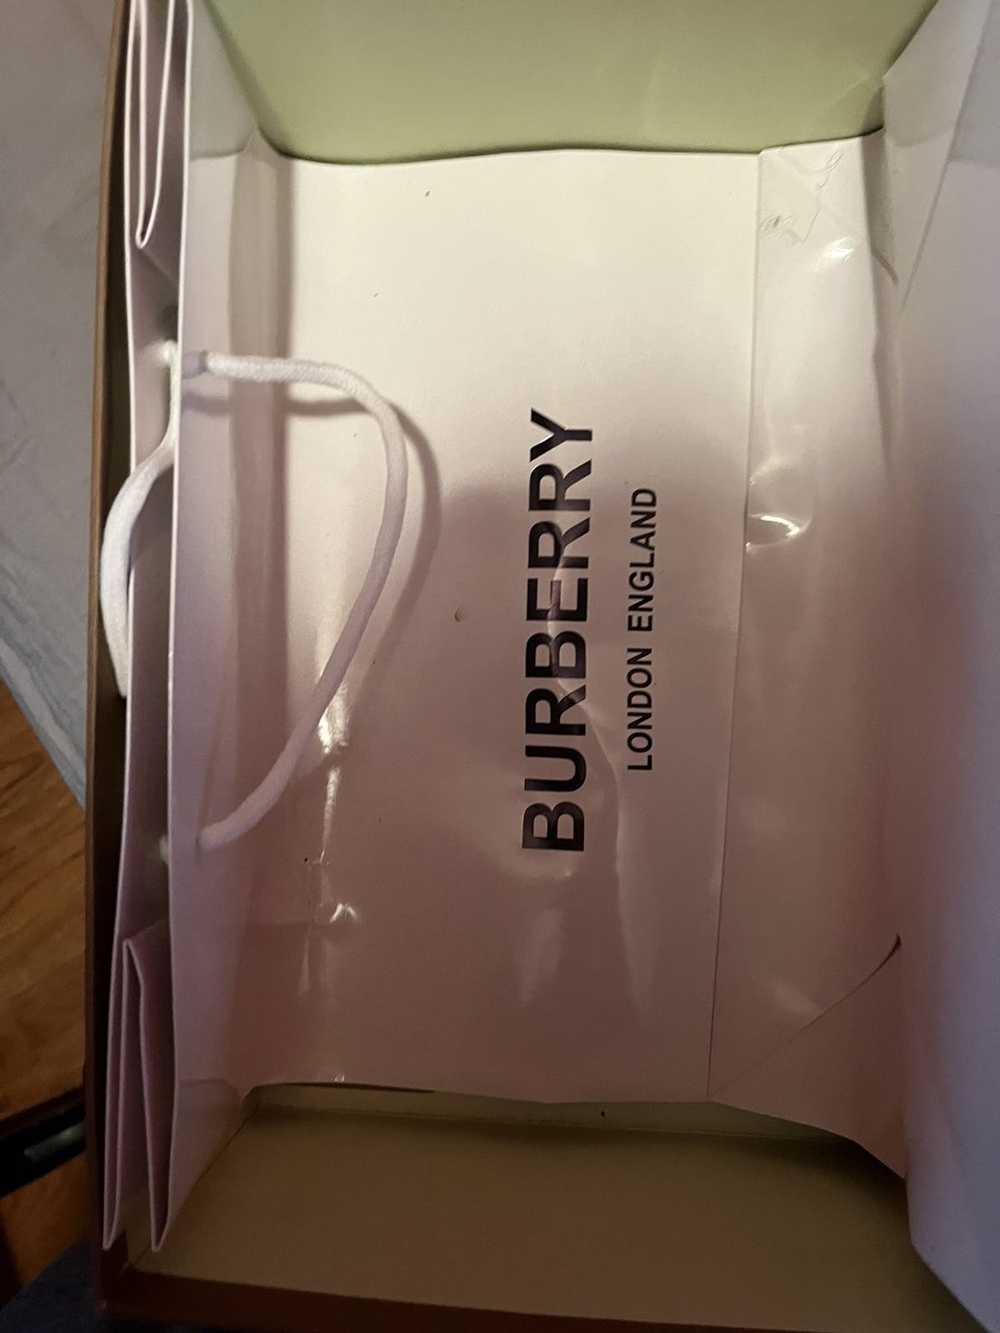 Burberry Burrberry - image 2